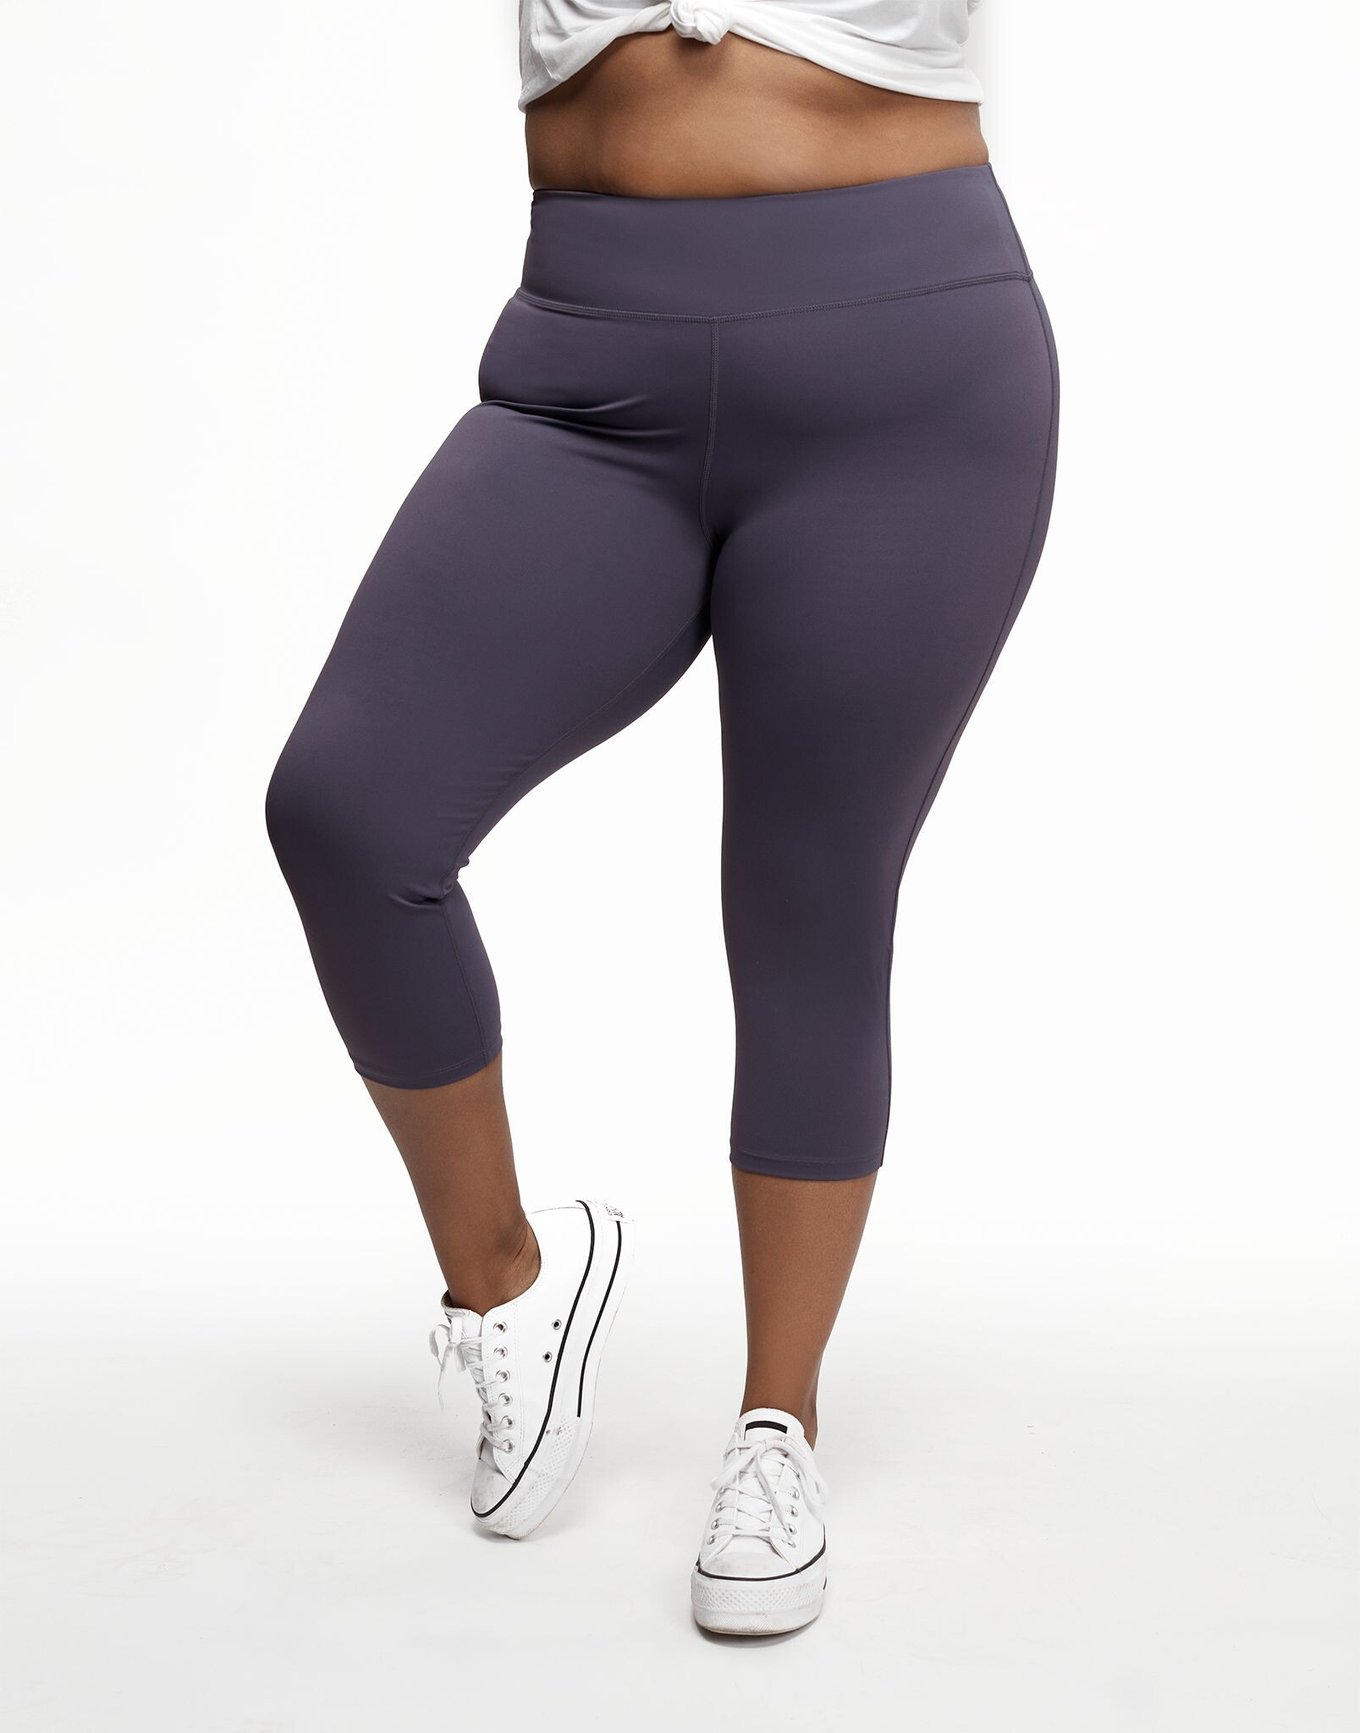 Plus Size Capri Leggings for Women Yoga Bottom Capris Pants High